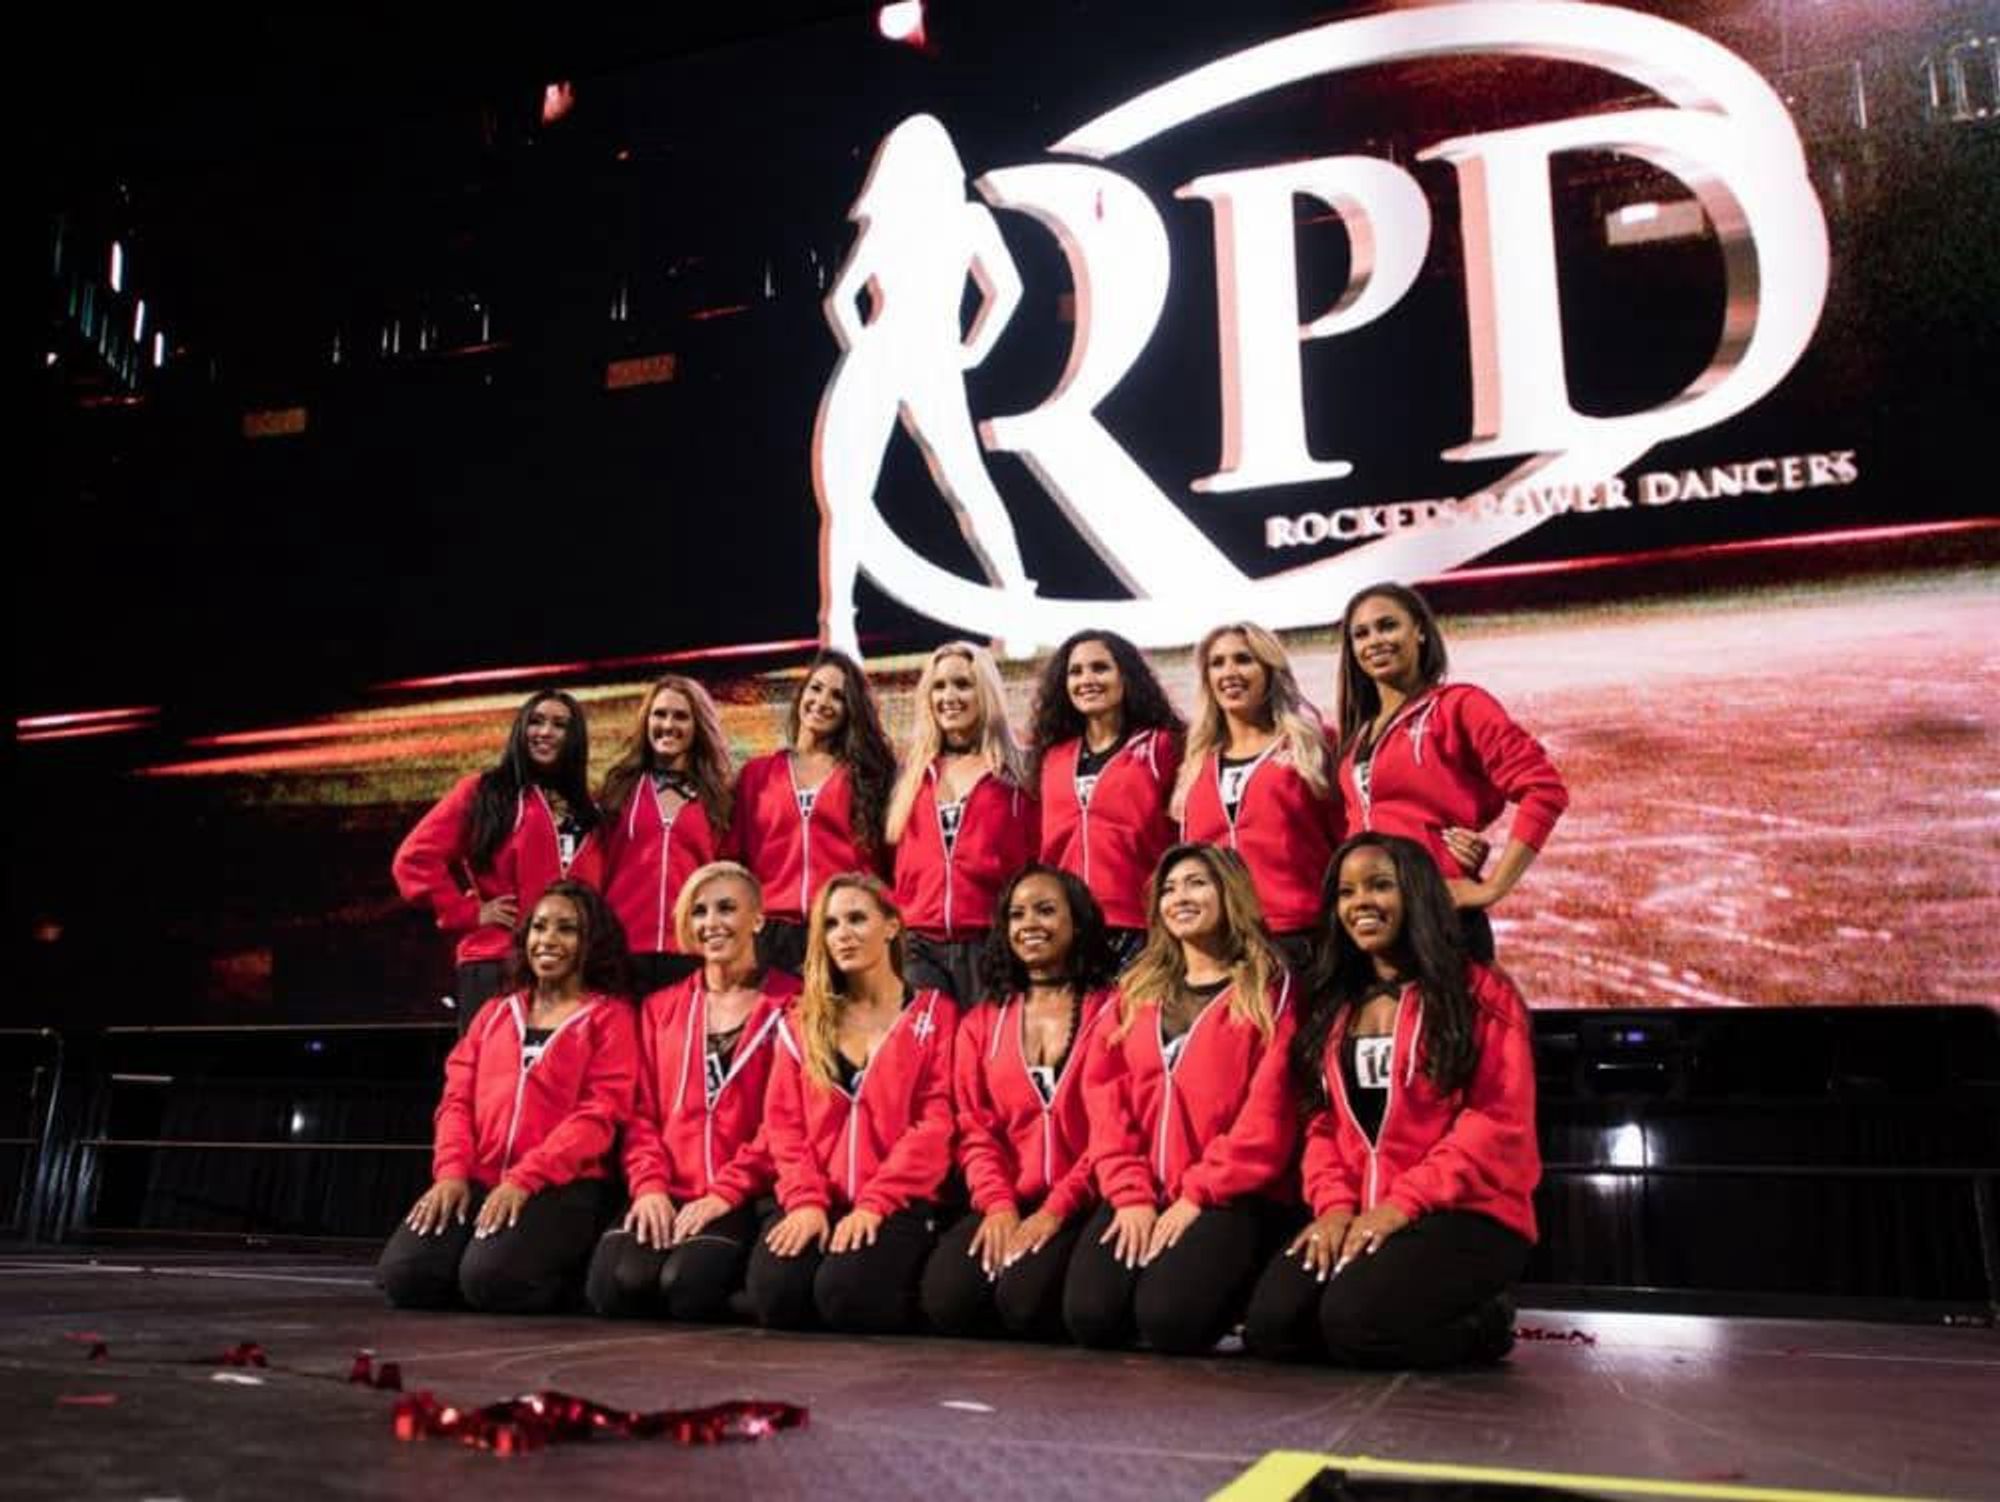 Houston Rockets Power Dancers winning team 2017